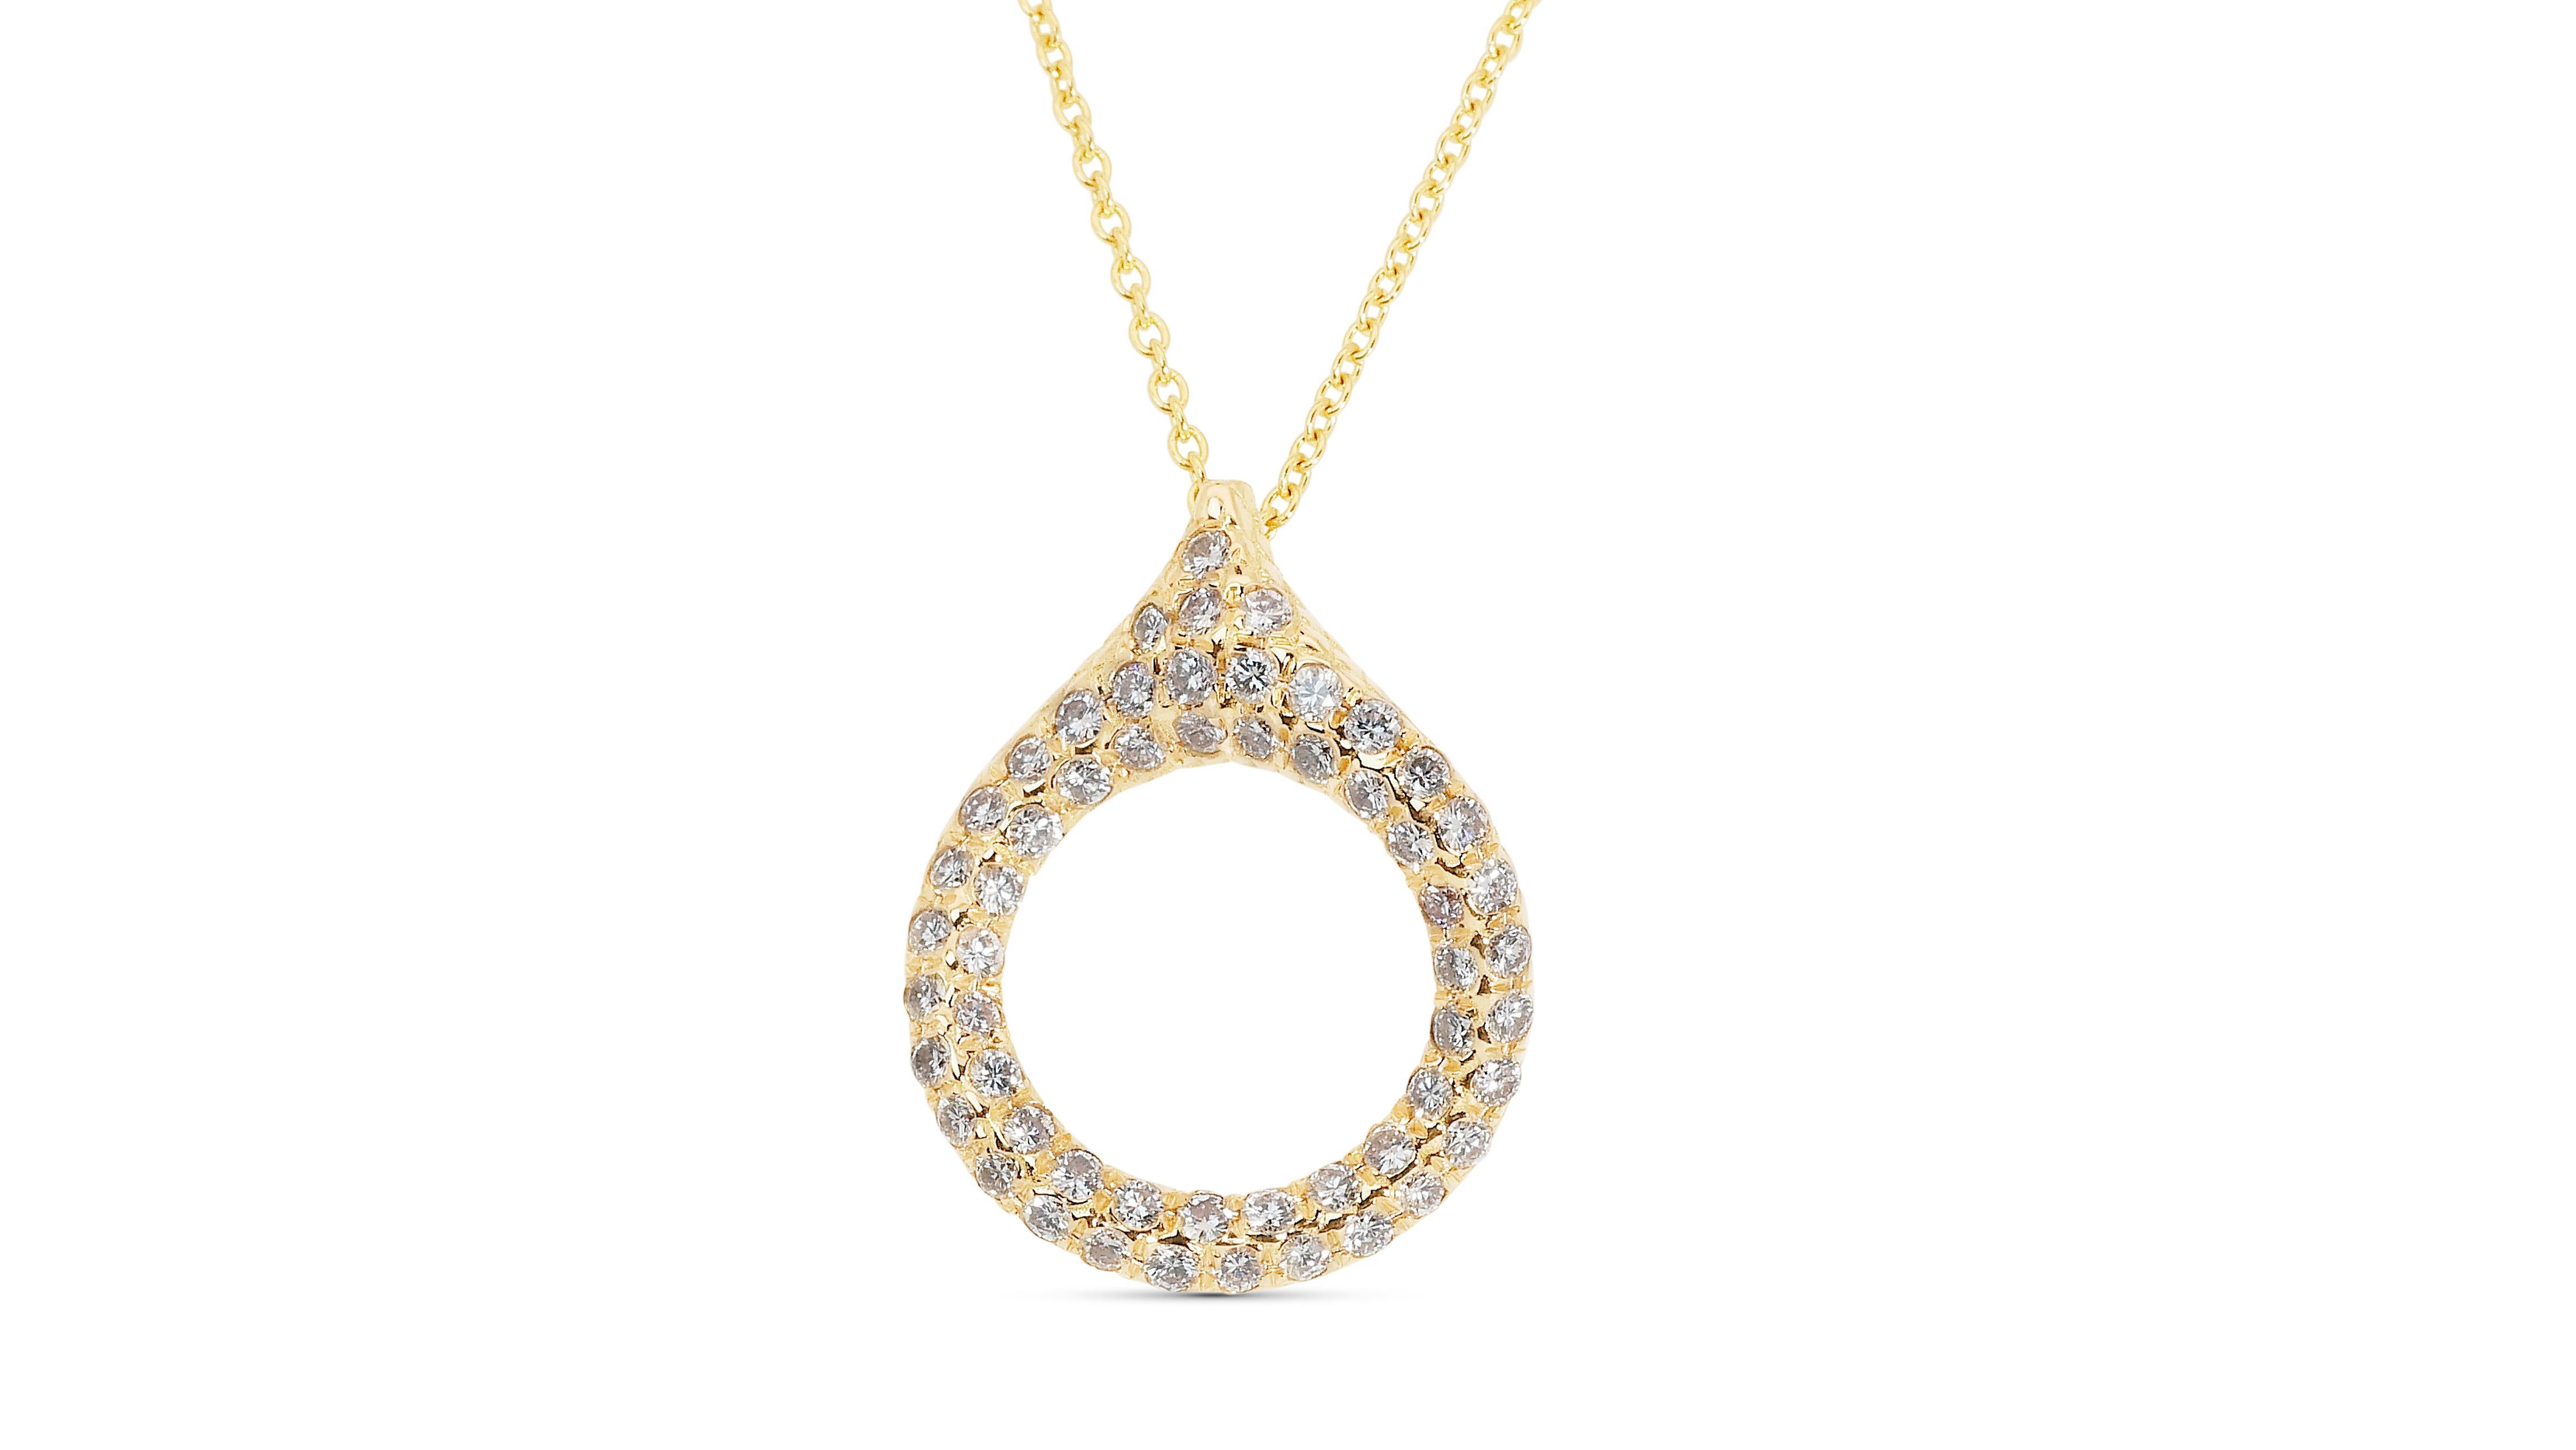 Round Cut Dazzling 18k Yellow Gold Necklace w/ 1.16 Carat Natural Diamonds IGI Certificate For Sale